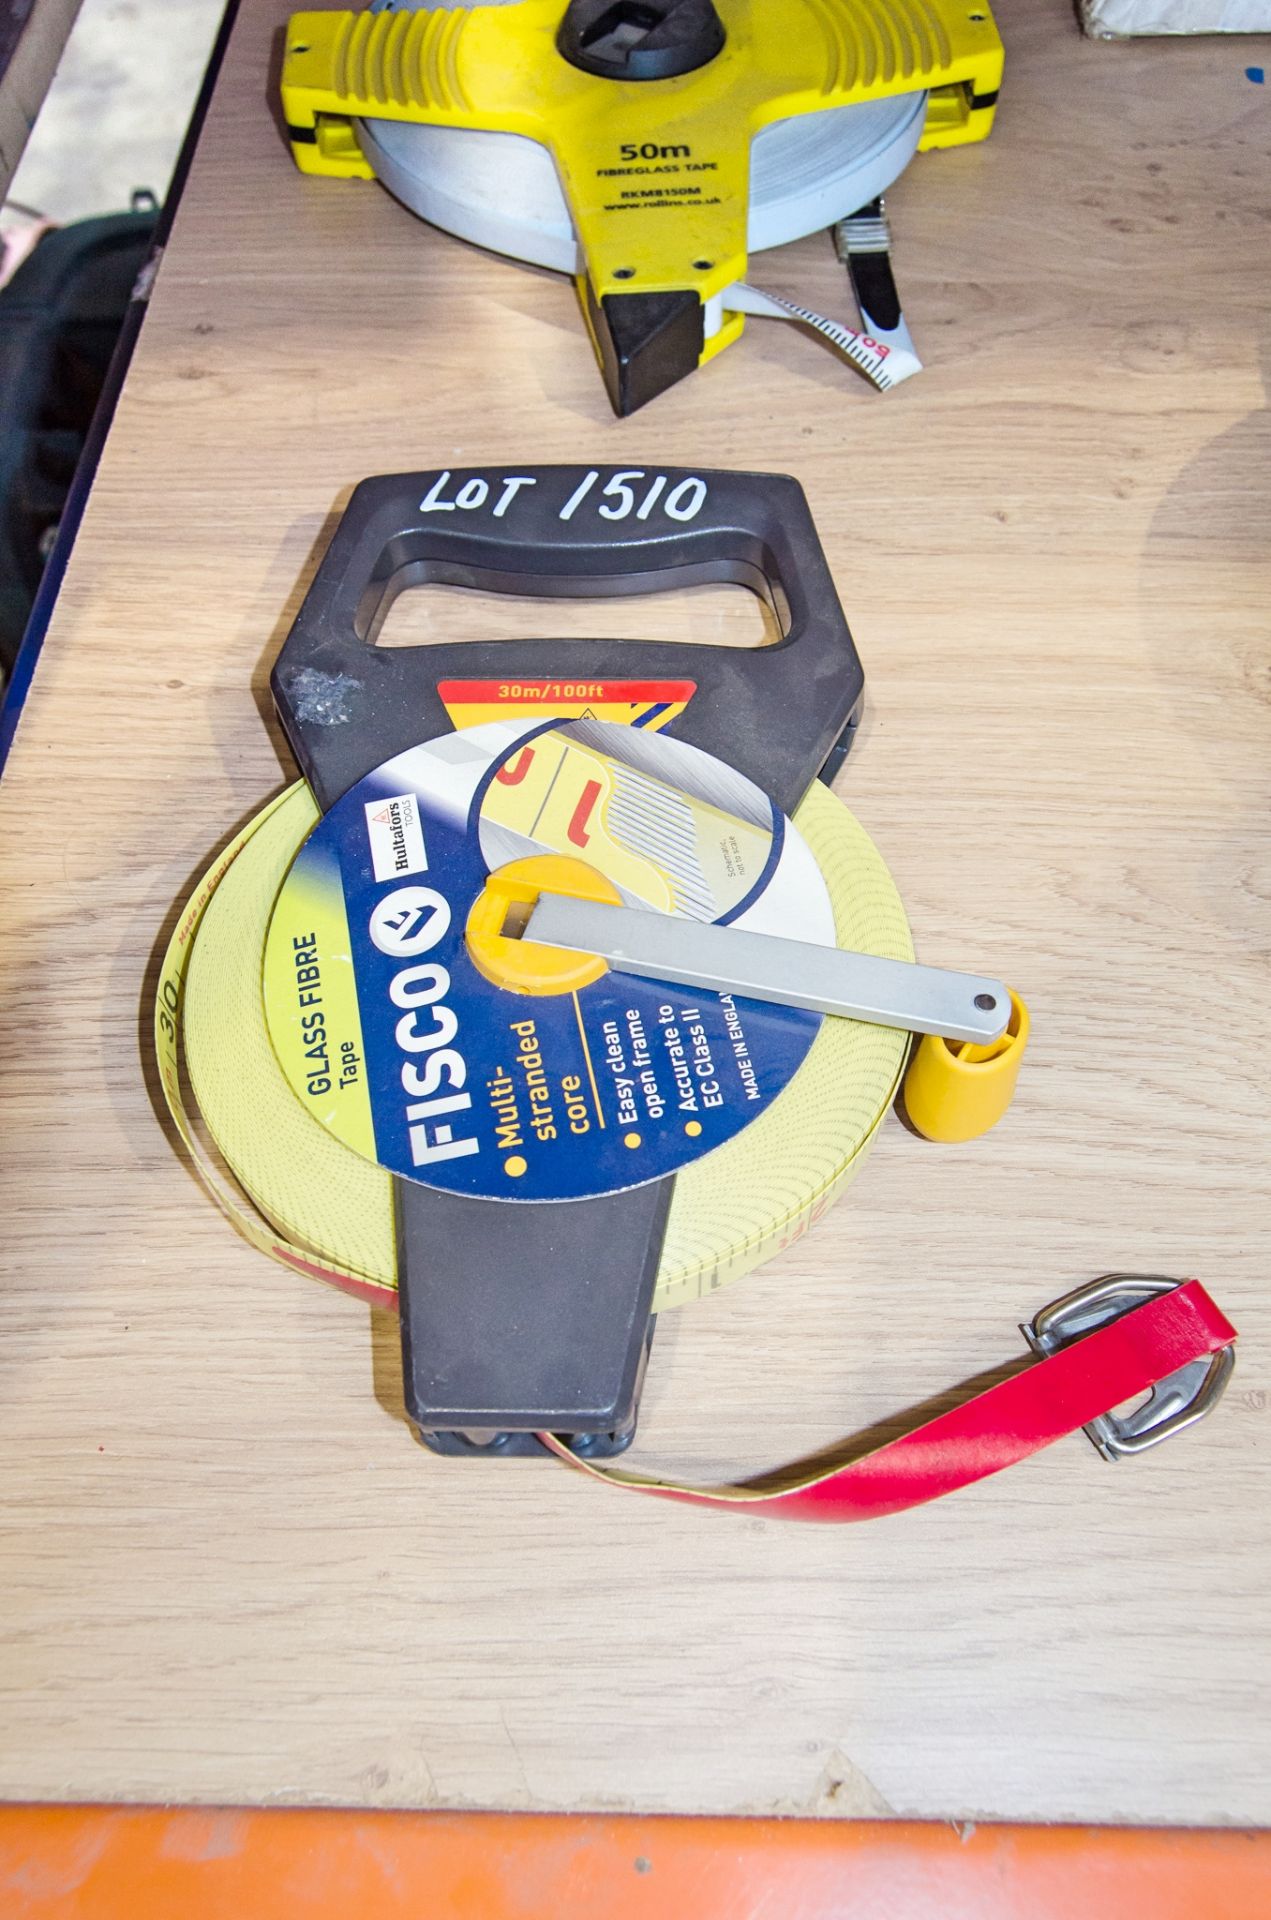 Fisco 30 metre tape measure